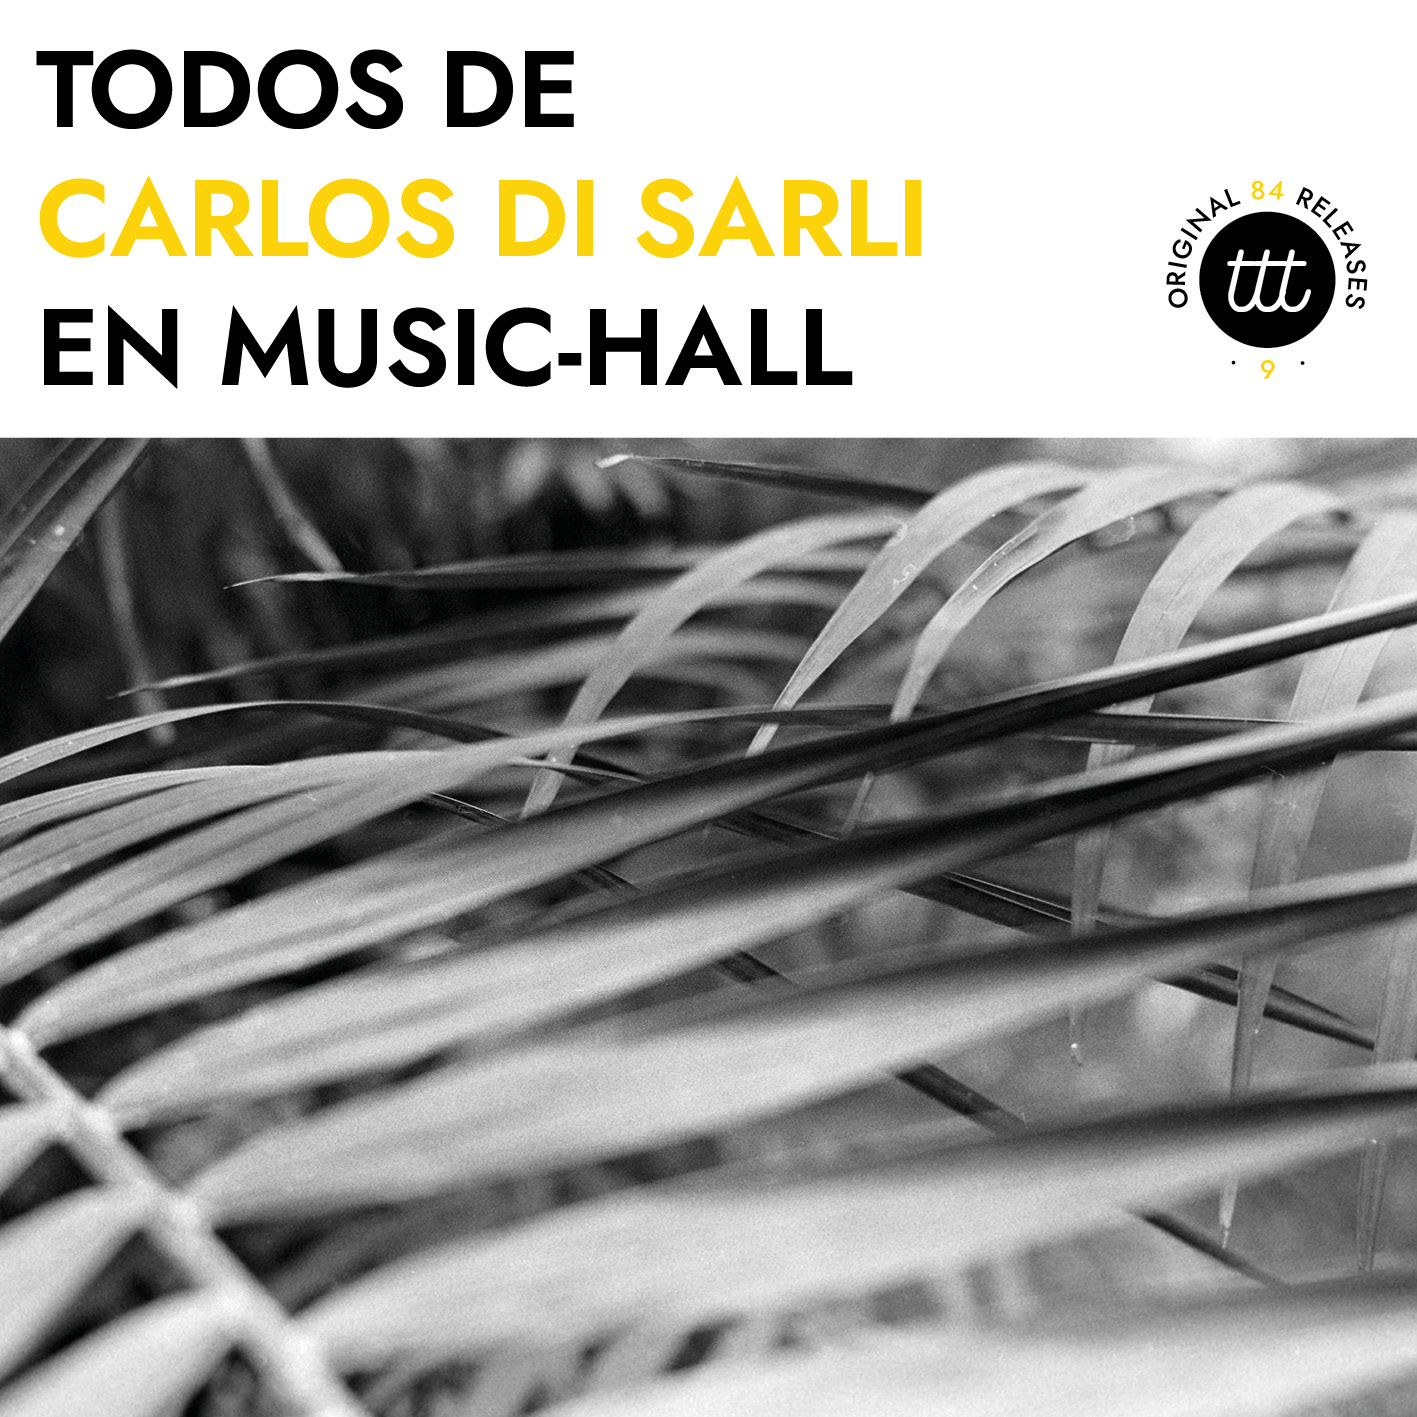 All recordings by Carlos Di Sarli on Music-Hall 1951-1954